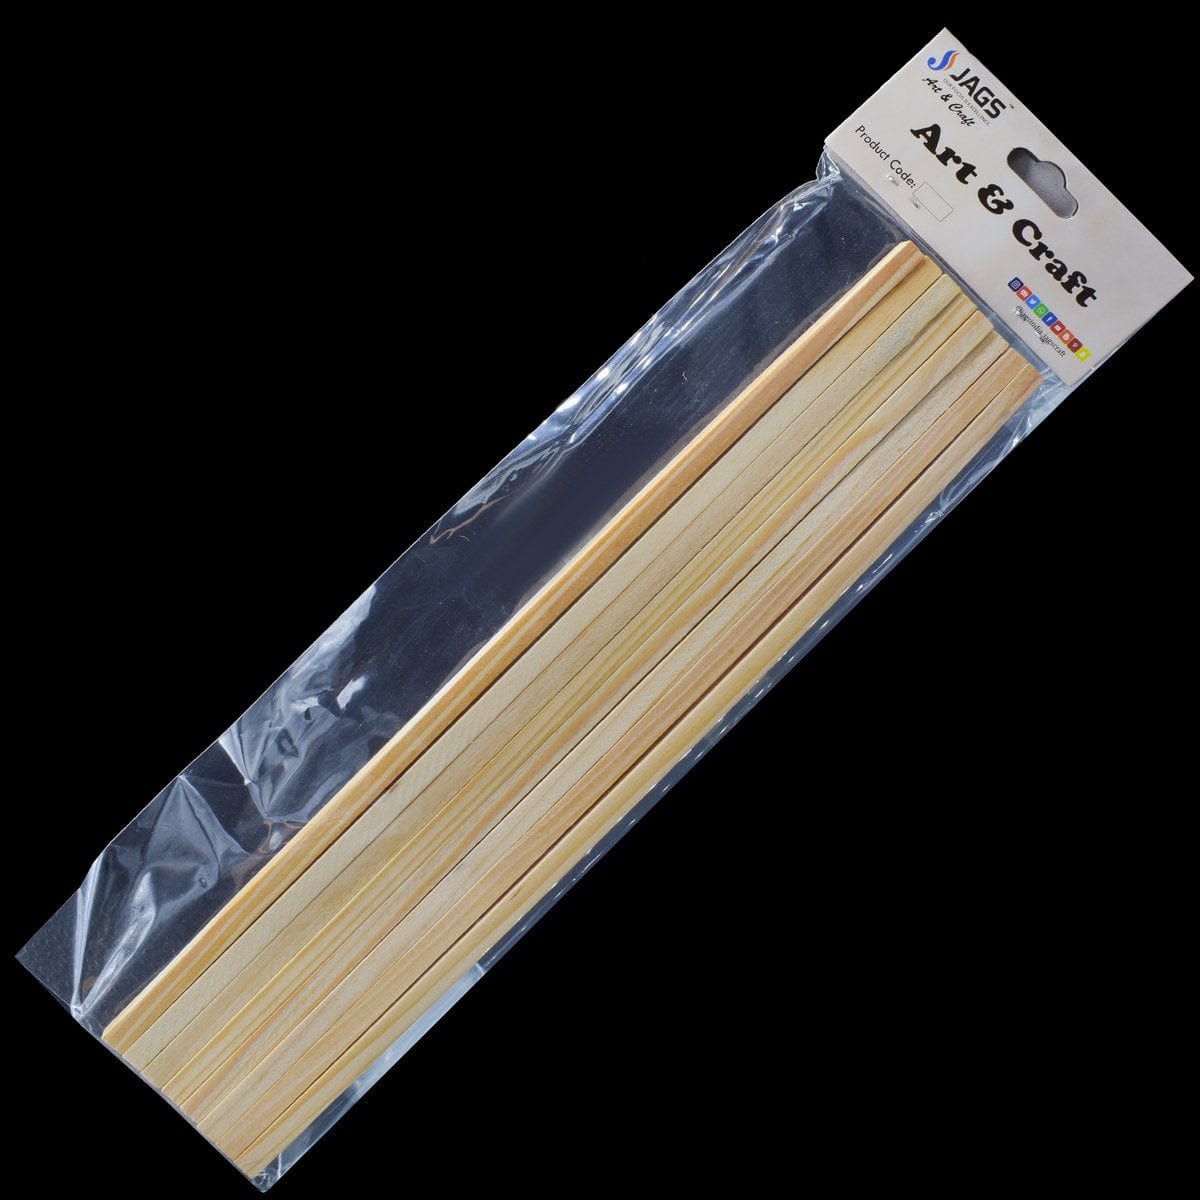 jags-mumbai Craft Sticks Wooden sticks - 4 inch - pack of 8 sticks